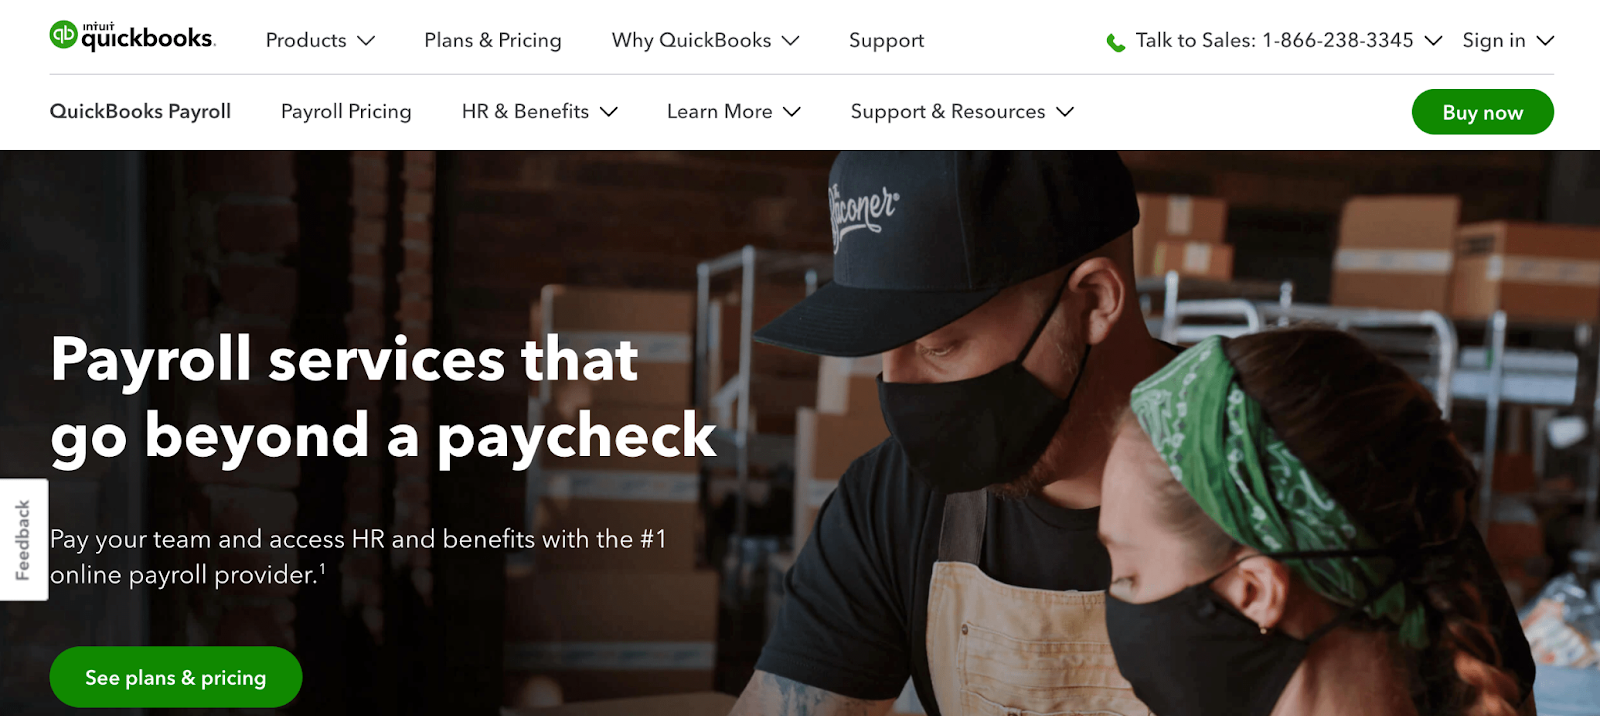 QuickBooks Payroll online payroll tax homepage.